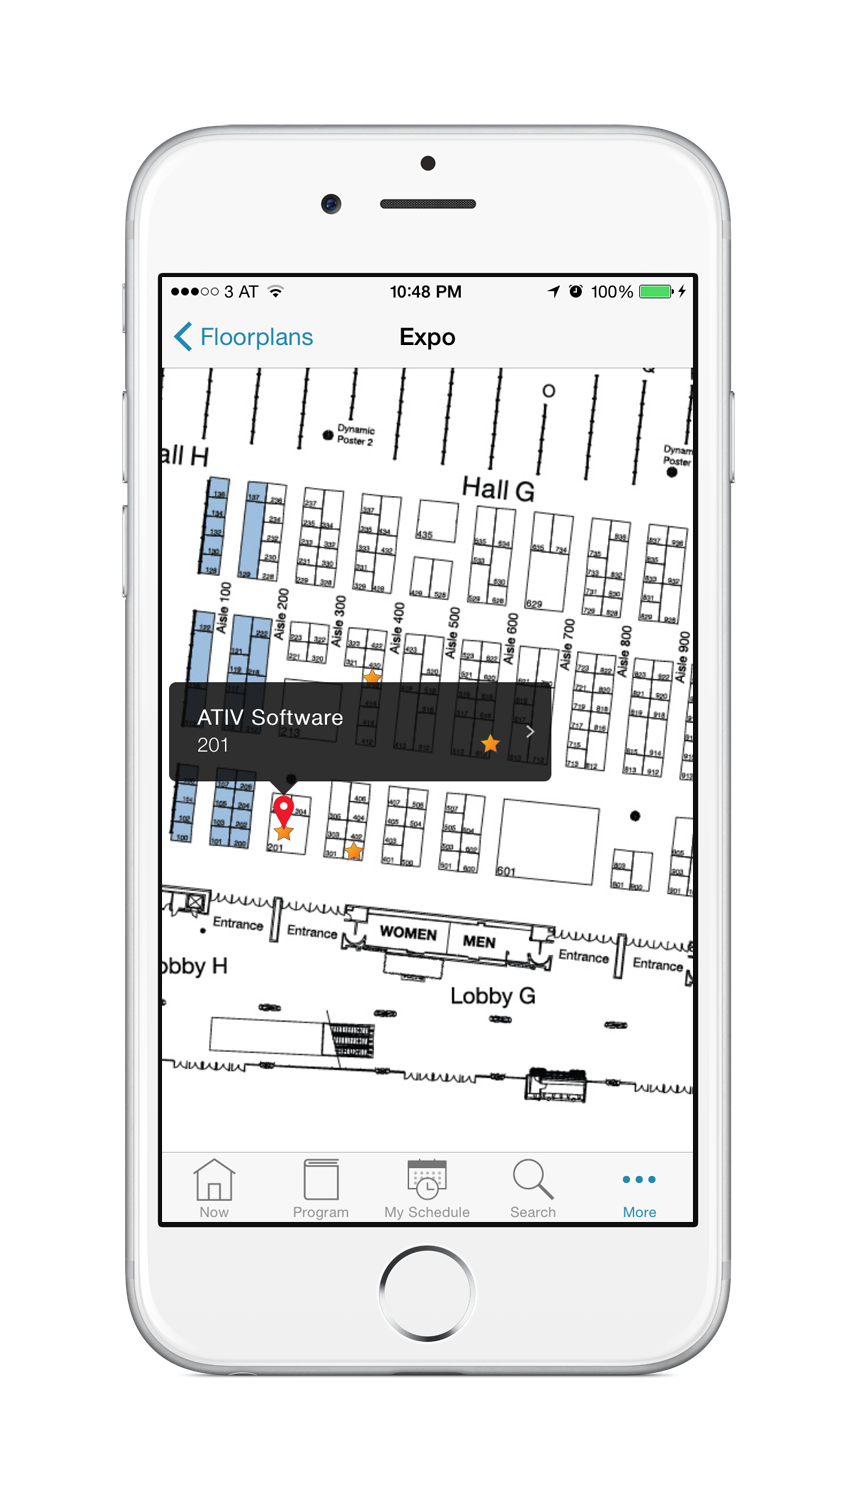 EventPilot Meeting App with expo floor plan